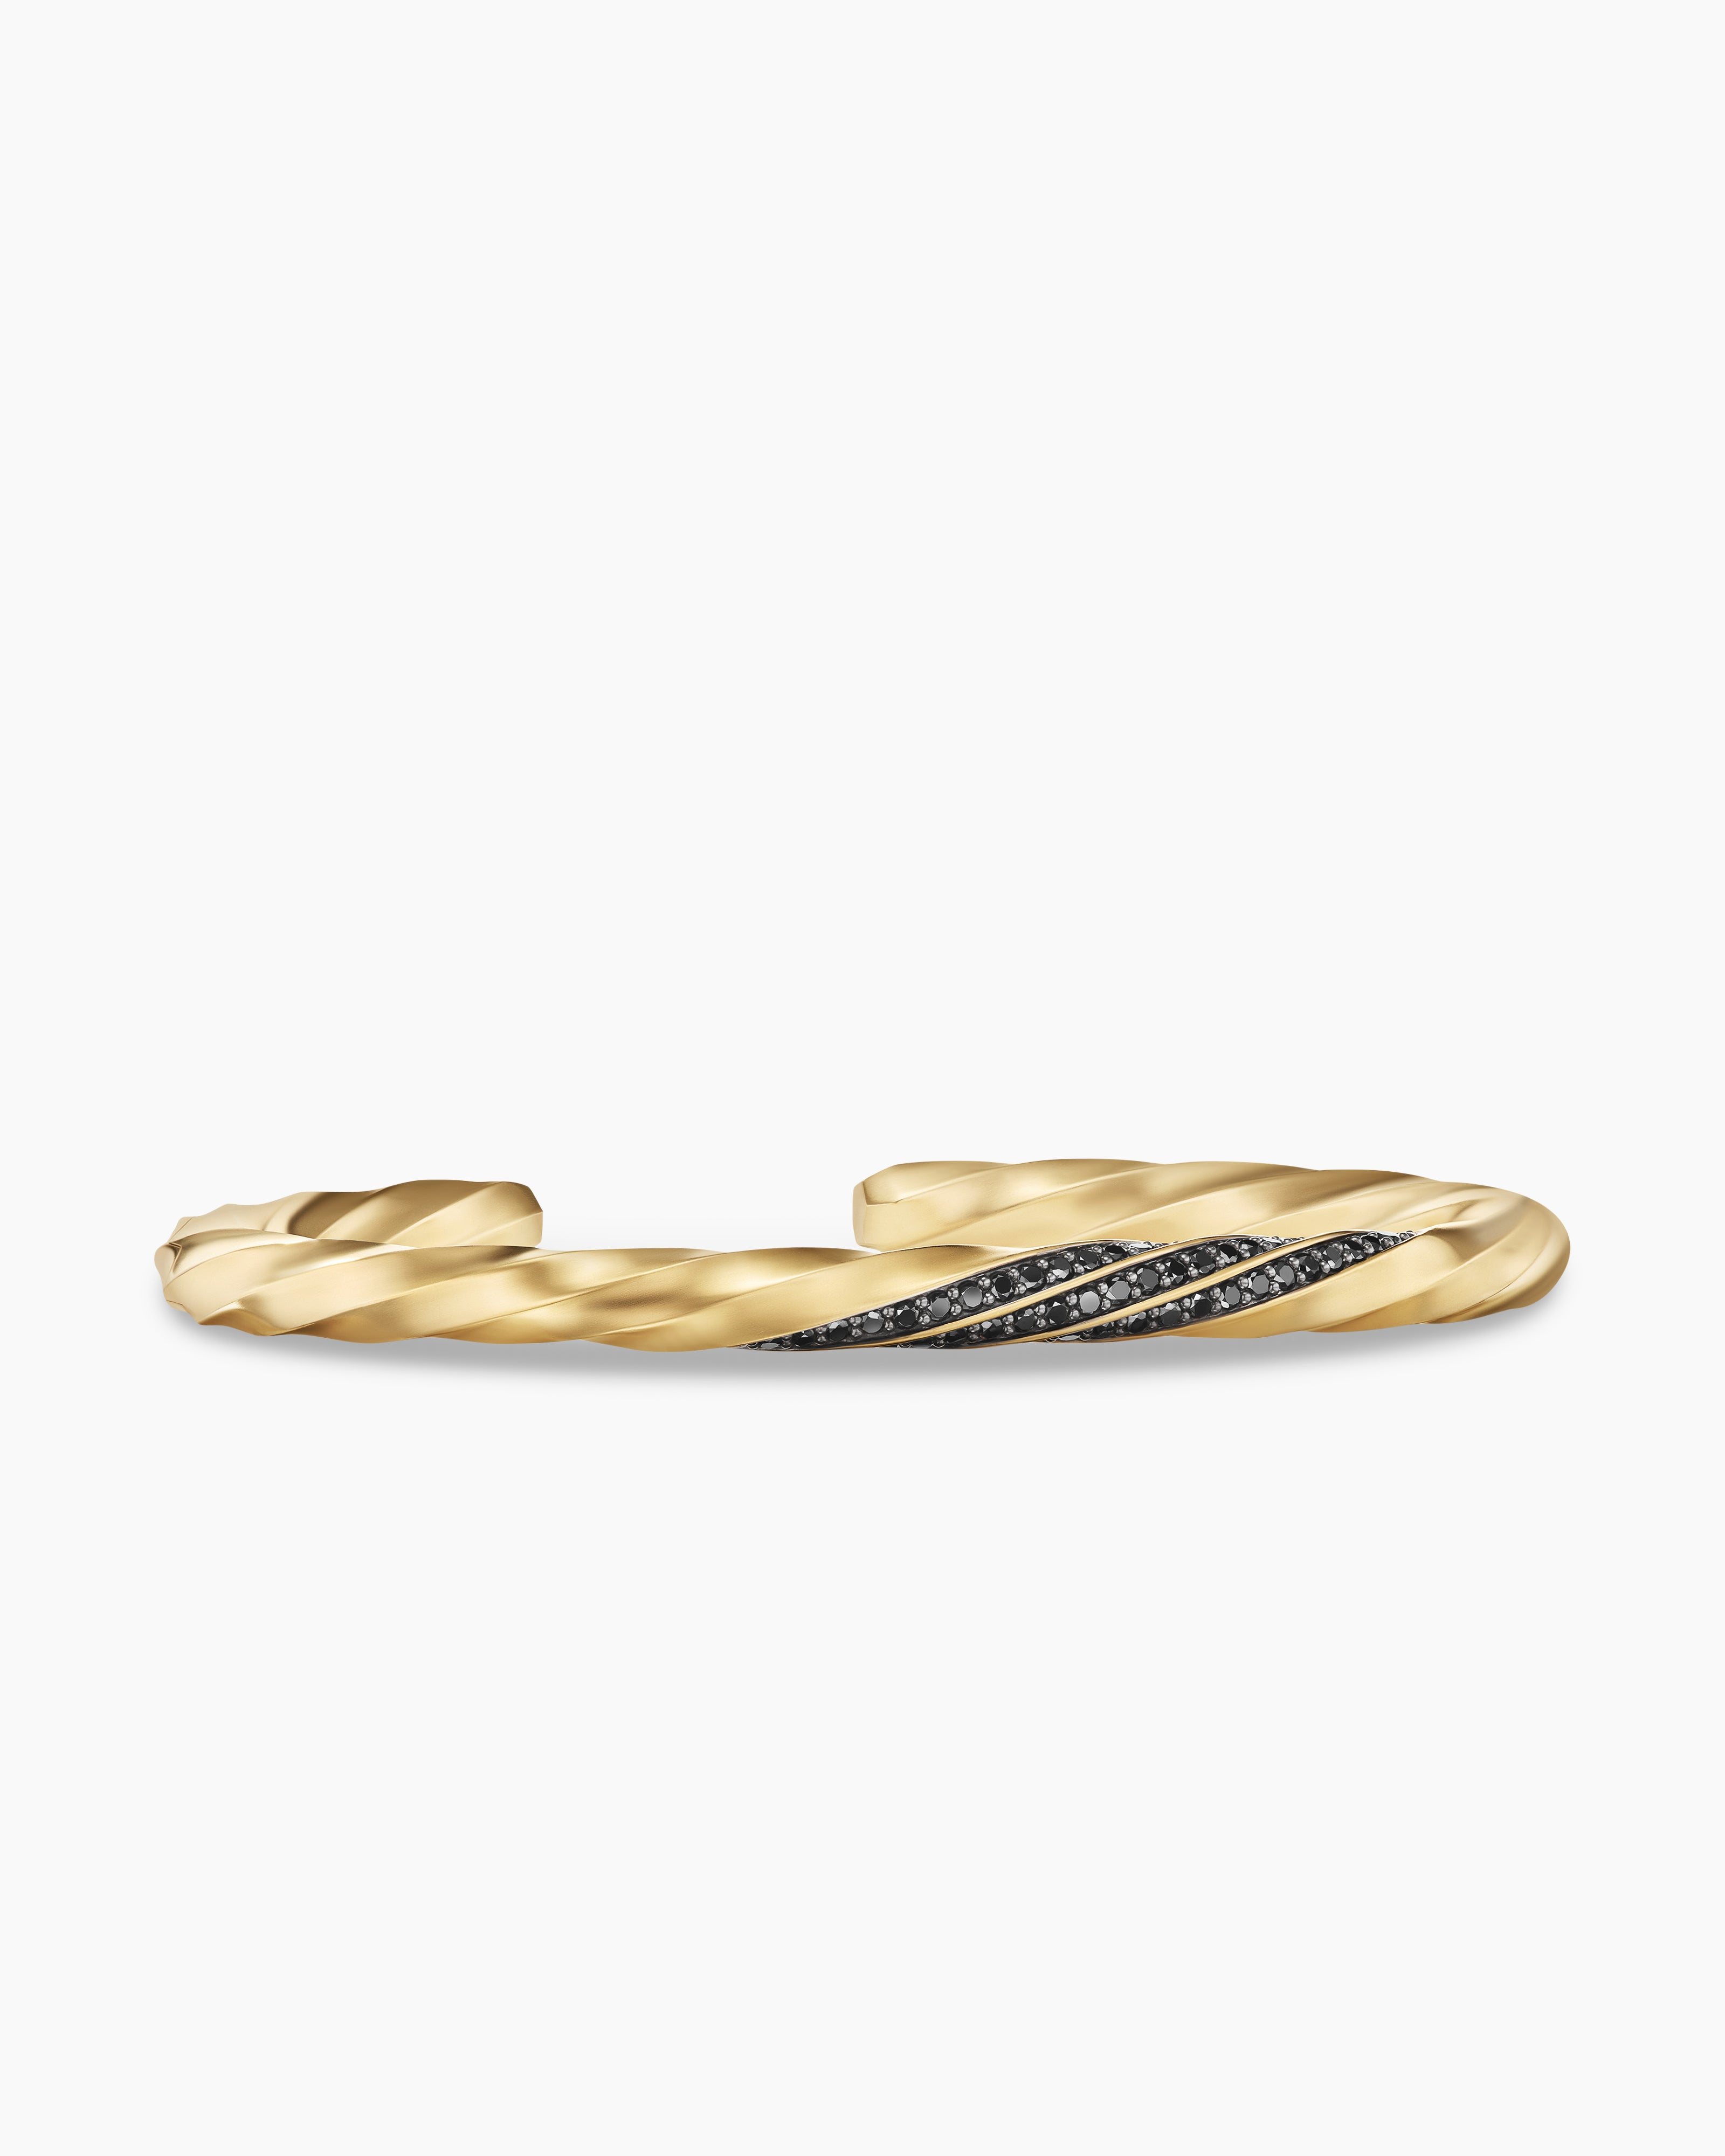 David Yurman Men's Cable Cuff Bracelet with 18K Yellow Gold - Black Onyx - Size Medium